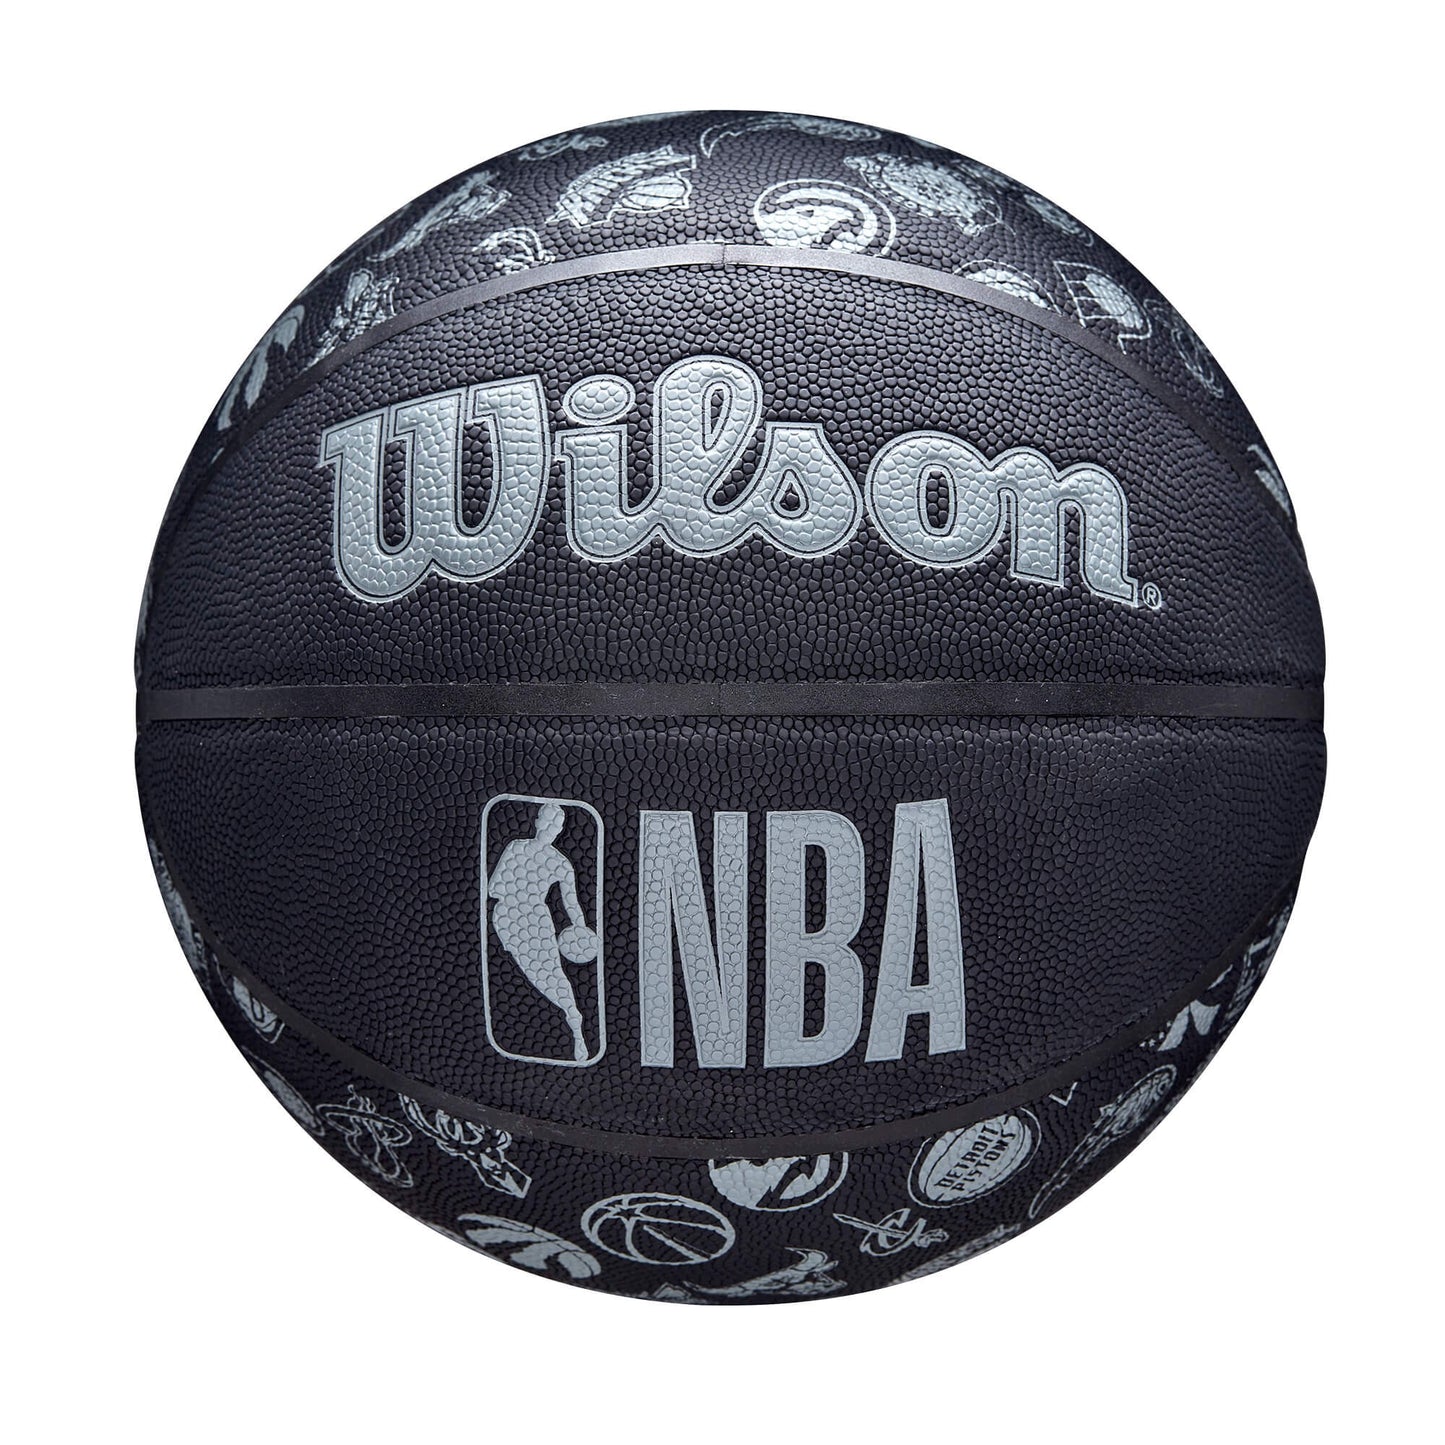 Wilson NBA All Team Alliance Basketball Black (sz. 7)